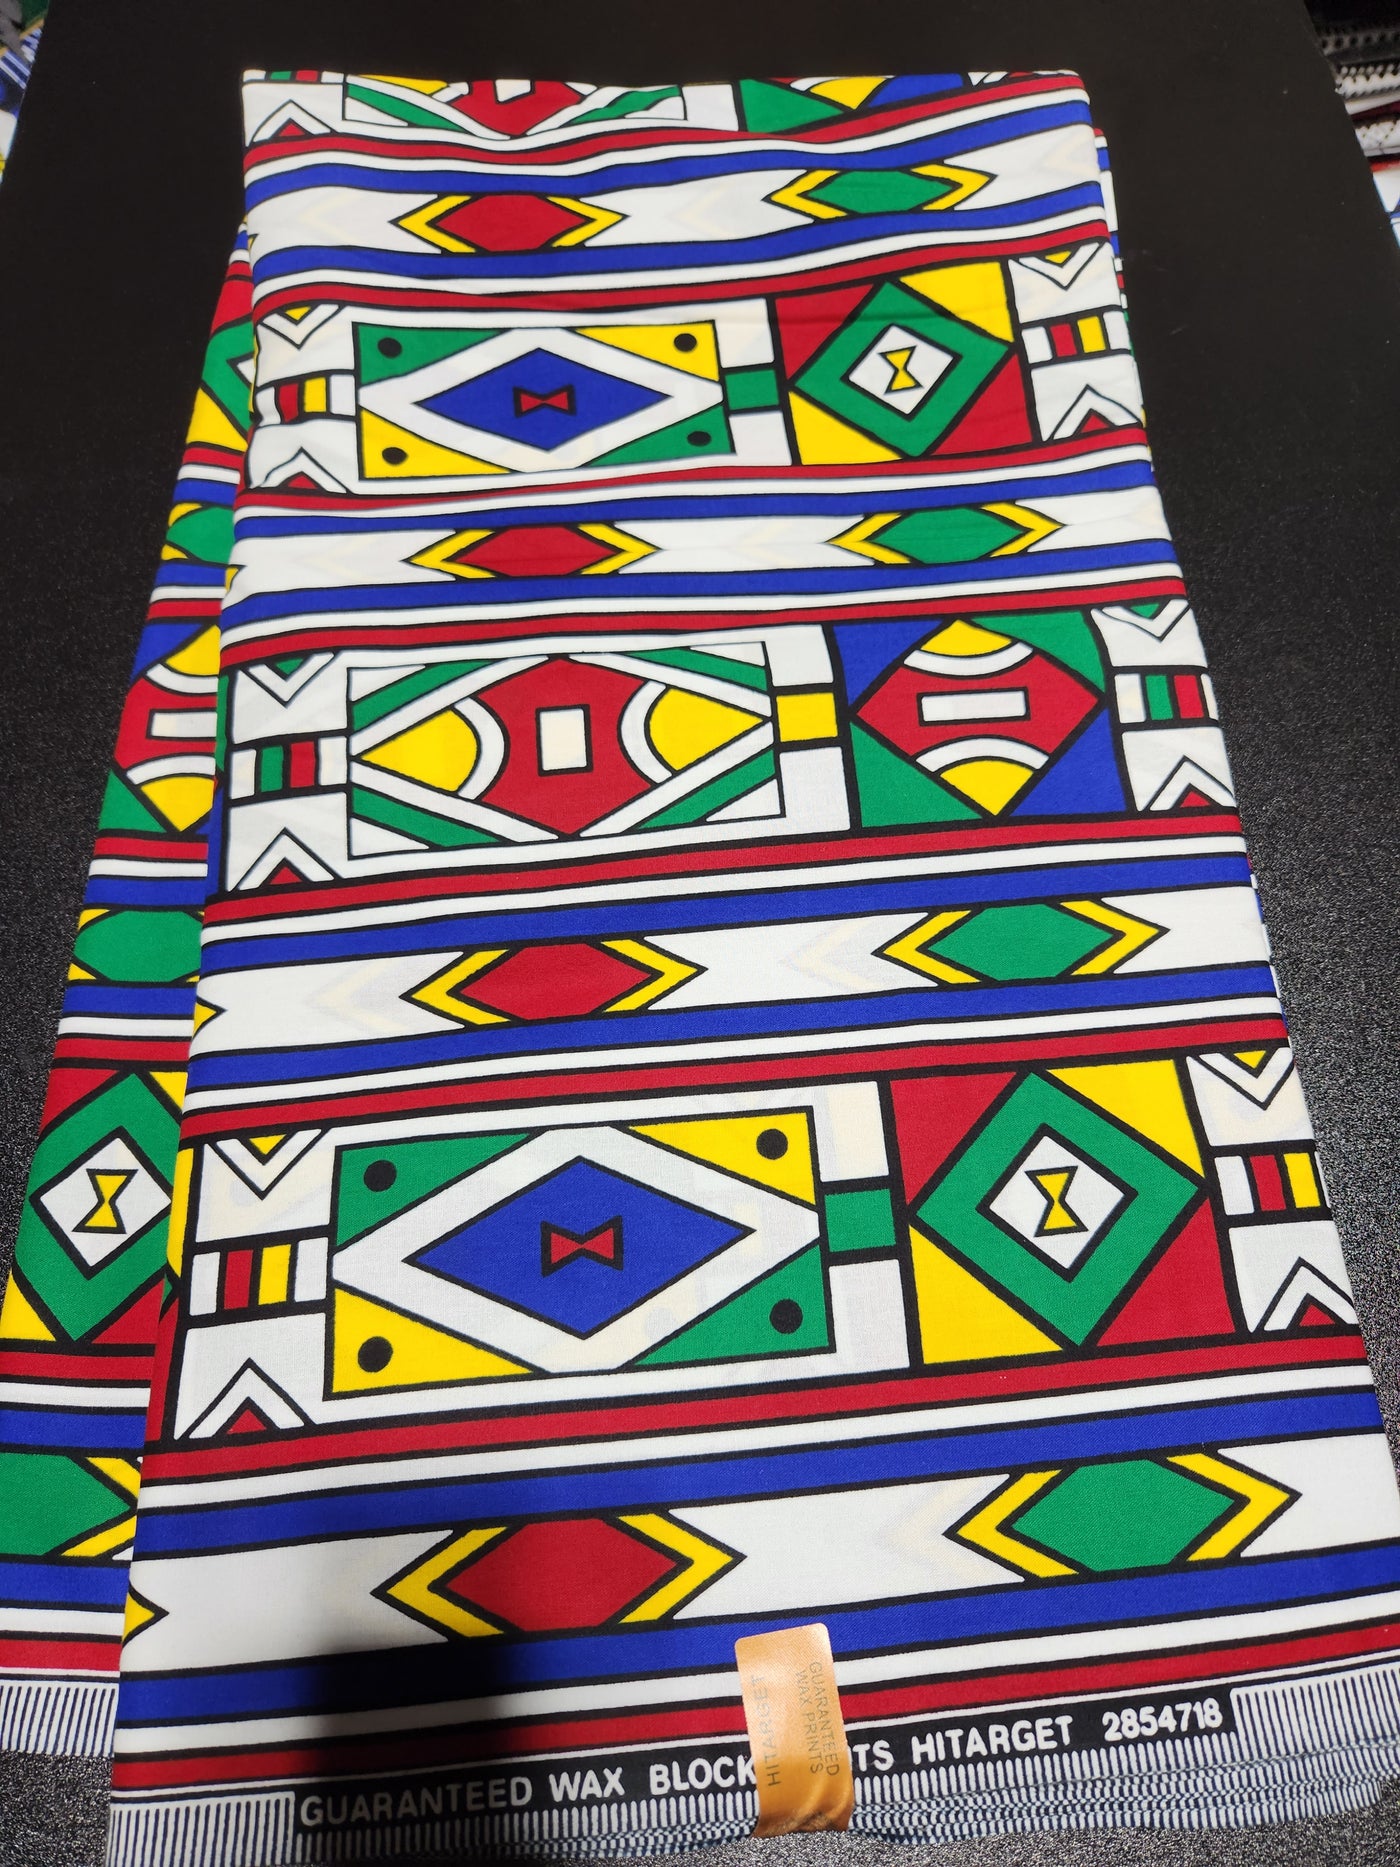 White Tribal Ankara Print Fabric, ACS2177